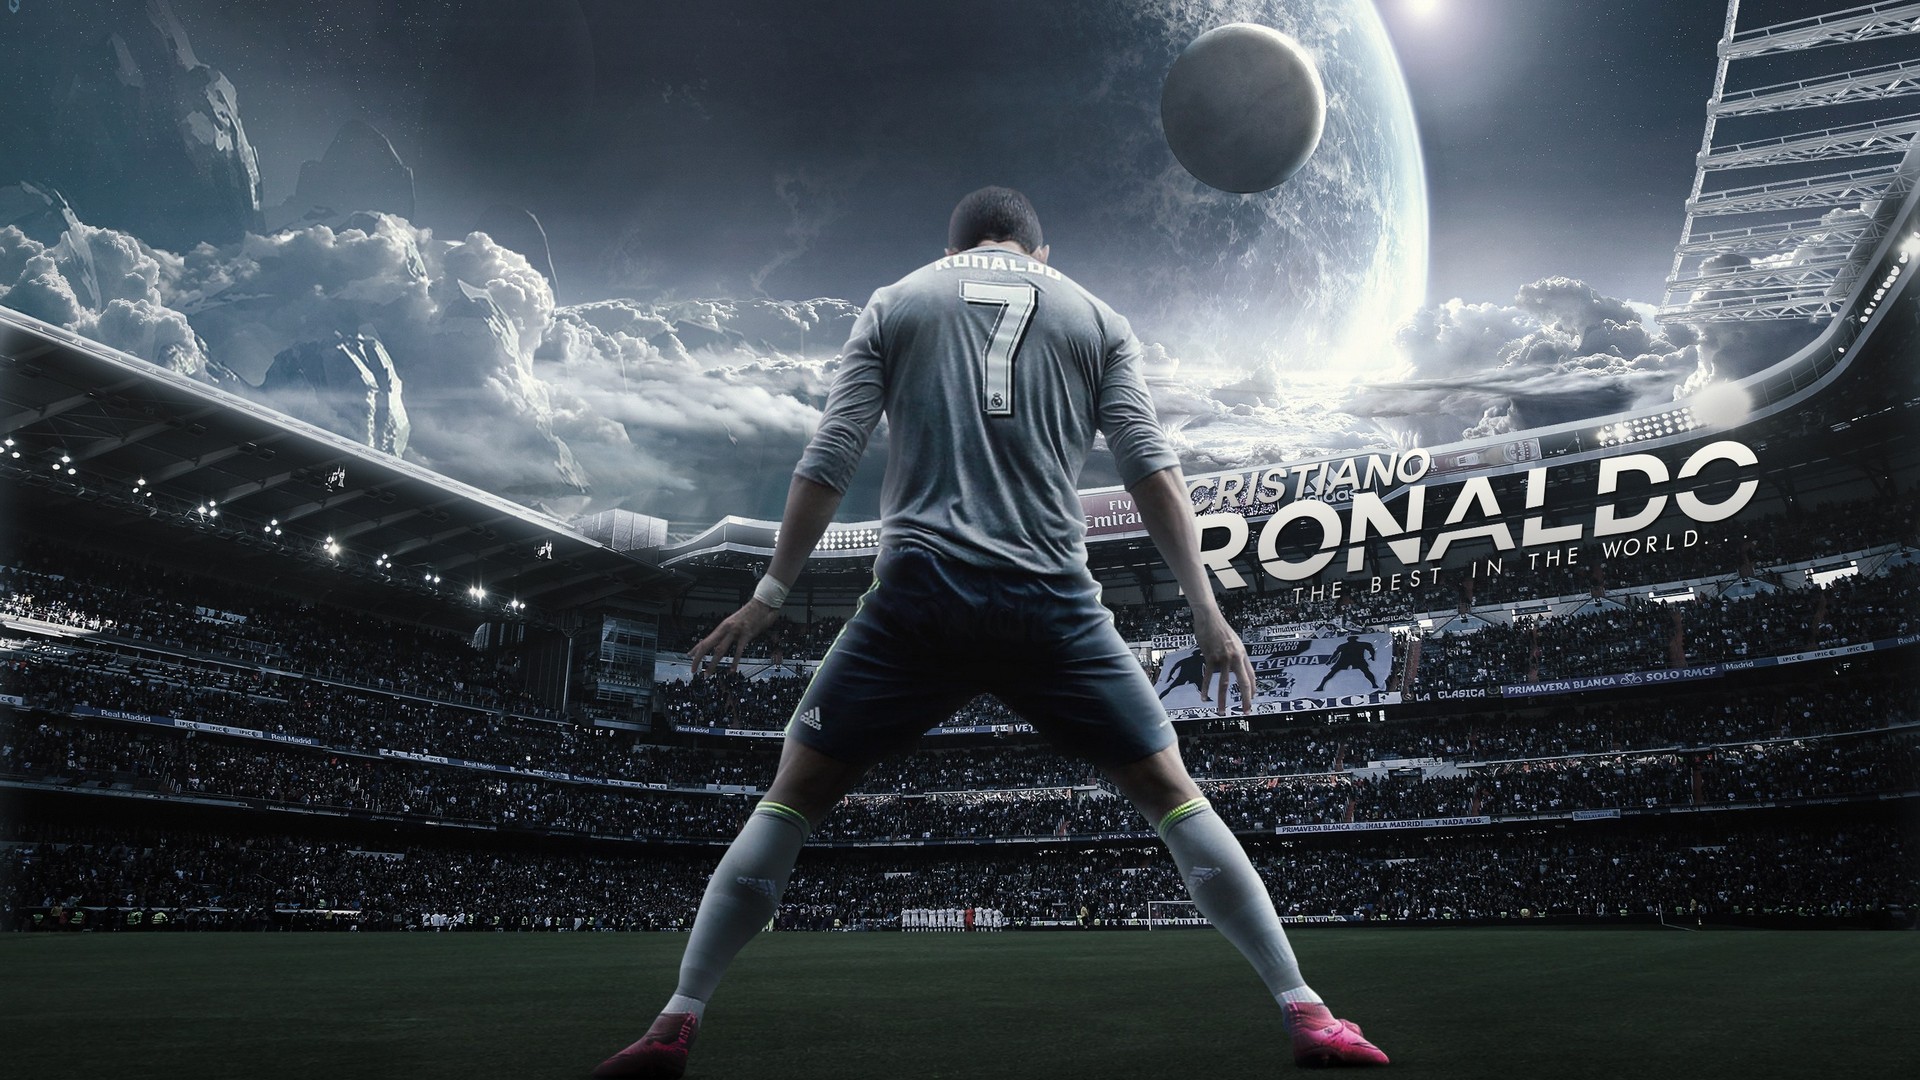 Cristiano Ronaldo Juventus Wallpaper Hd With Image Cristiano Ronaldo